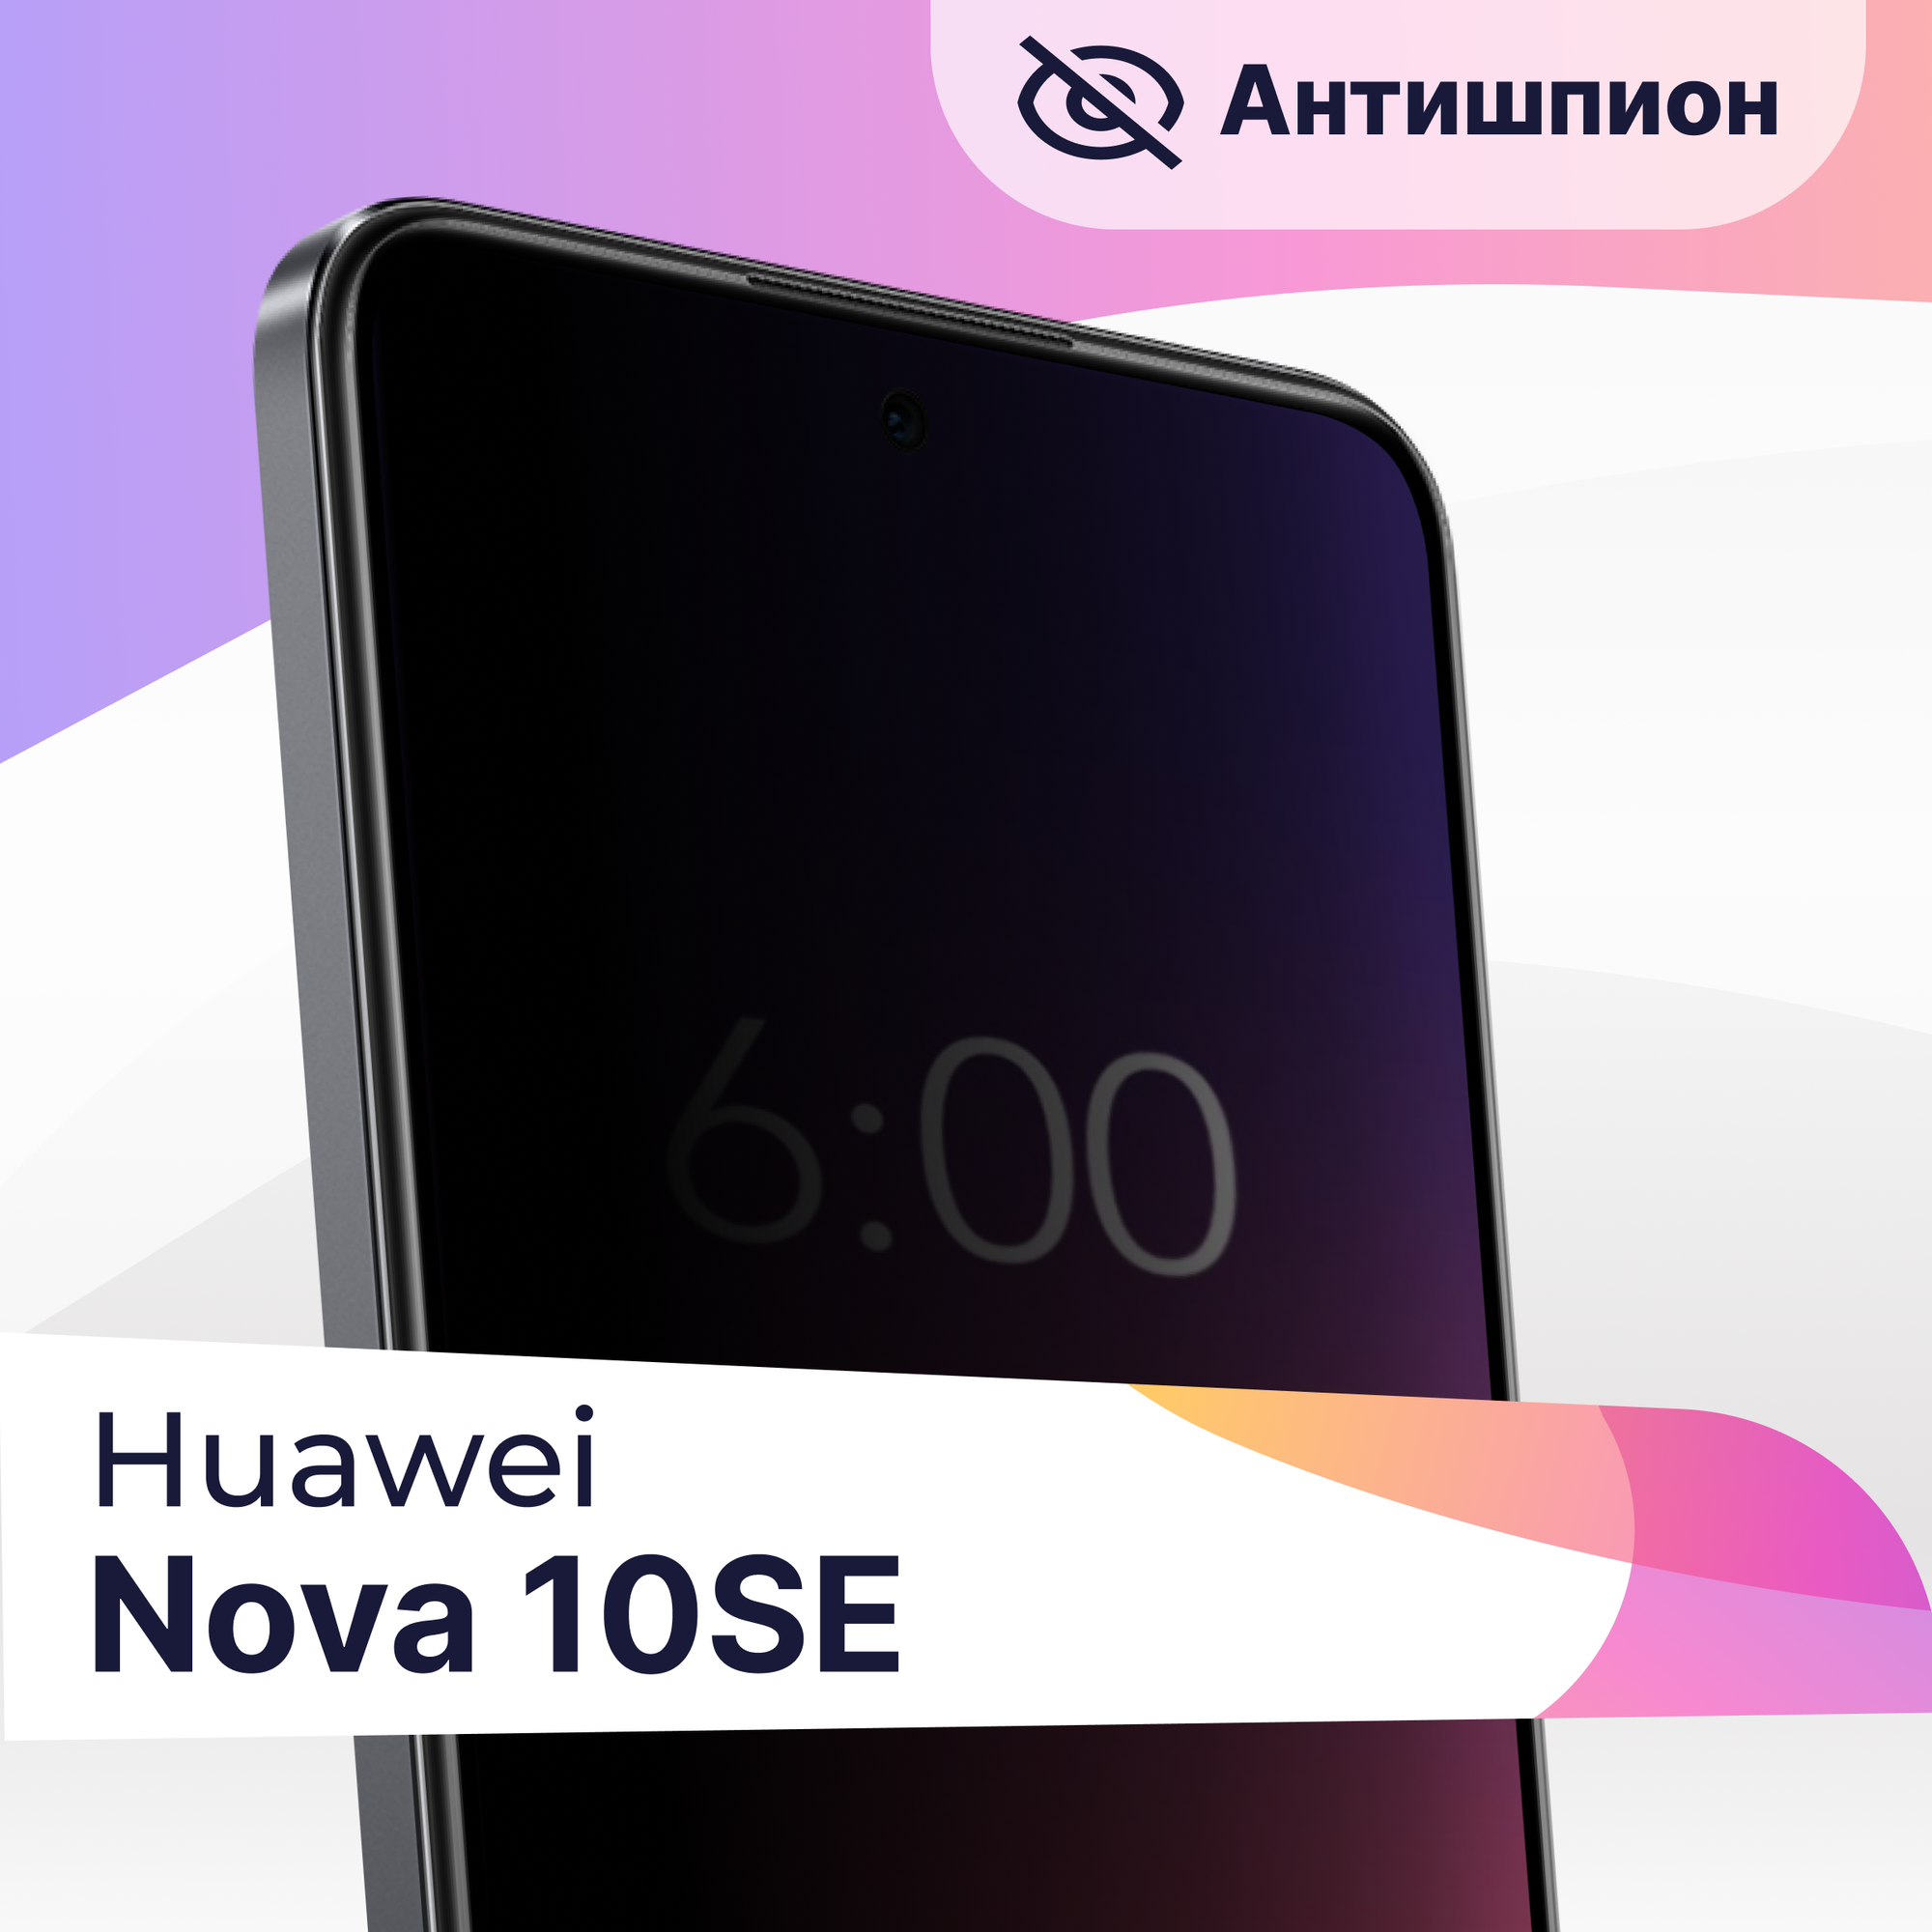 Защитное стекло Антишпион на телефон Huawei Nova 10 SE / Premium 5D стекло для смартфона Хуавей Нова 10 СЕ с черной рамкой / Противоударное стекло